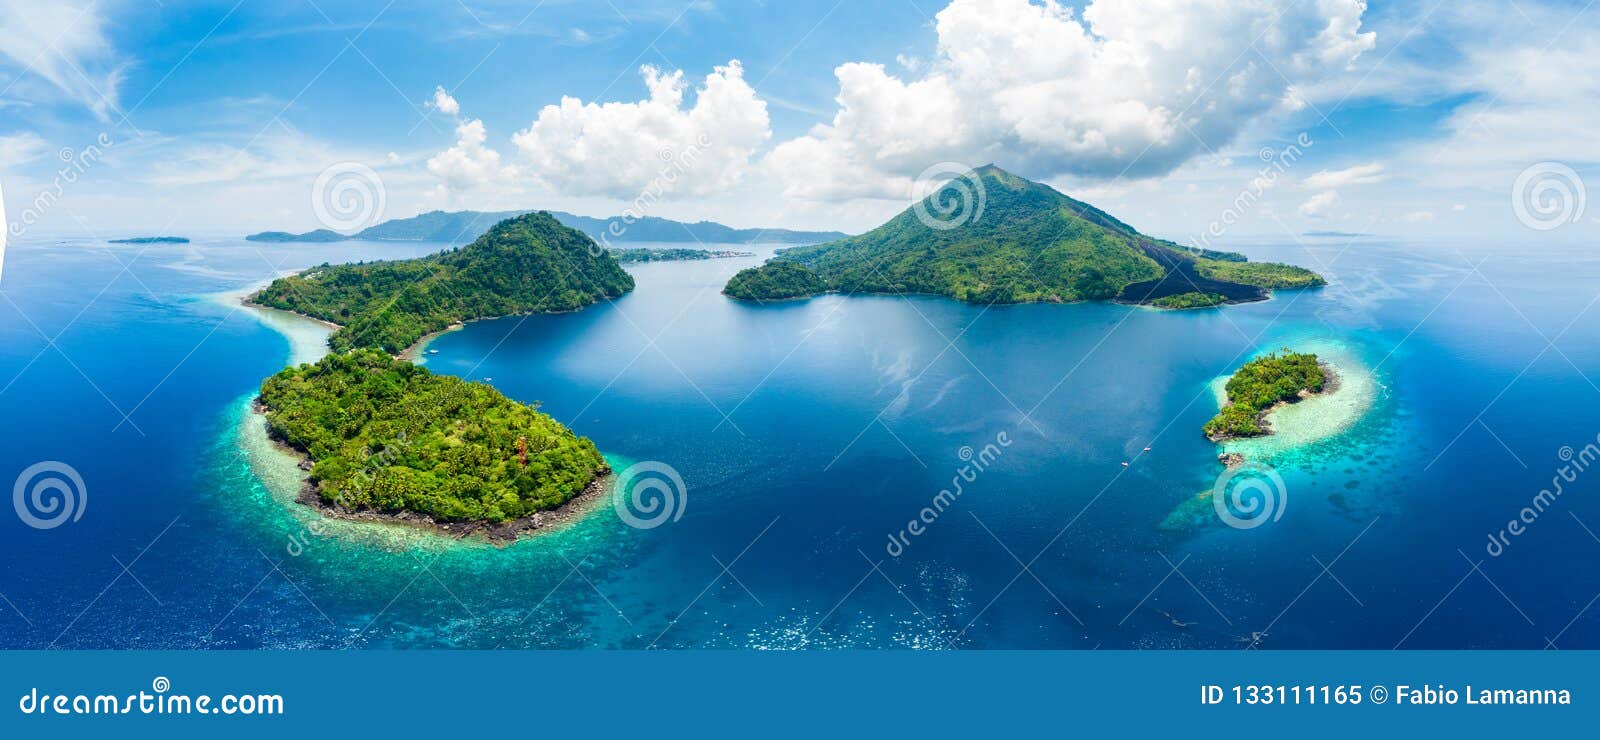 aerial view banda islands moluccas archipelago indonesia, pulau gunung api, lava flows, coral reef white sand beach. top travel